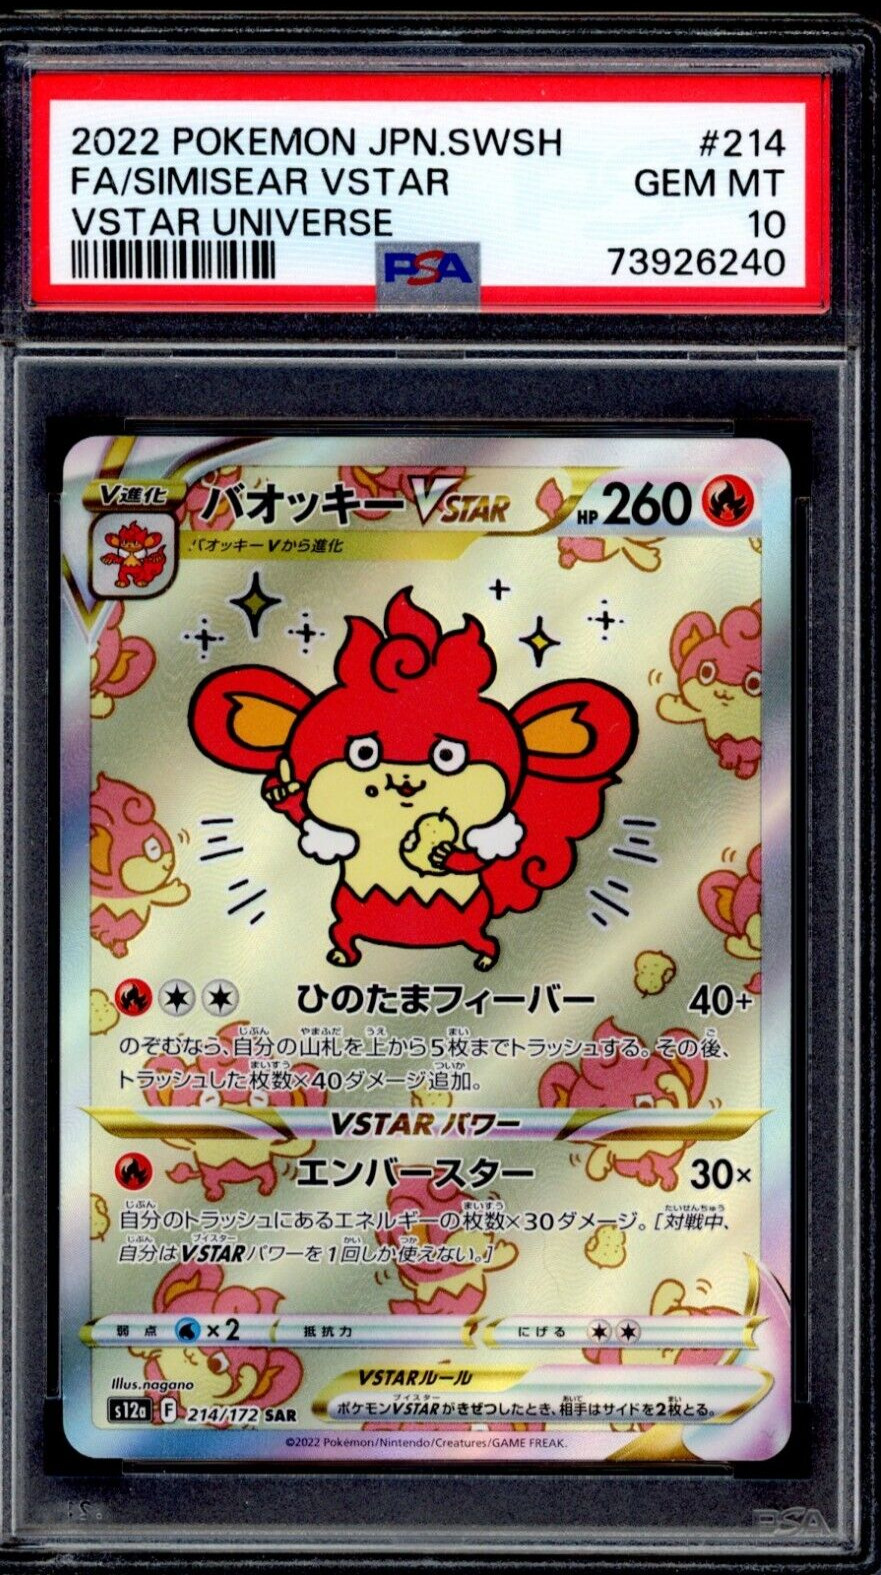 PSA 10 Simisear Vstar 2022 Pokemon Card s12a 214/172 Vstar Universe